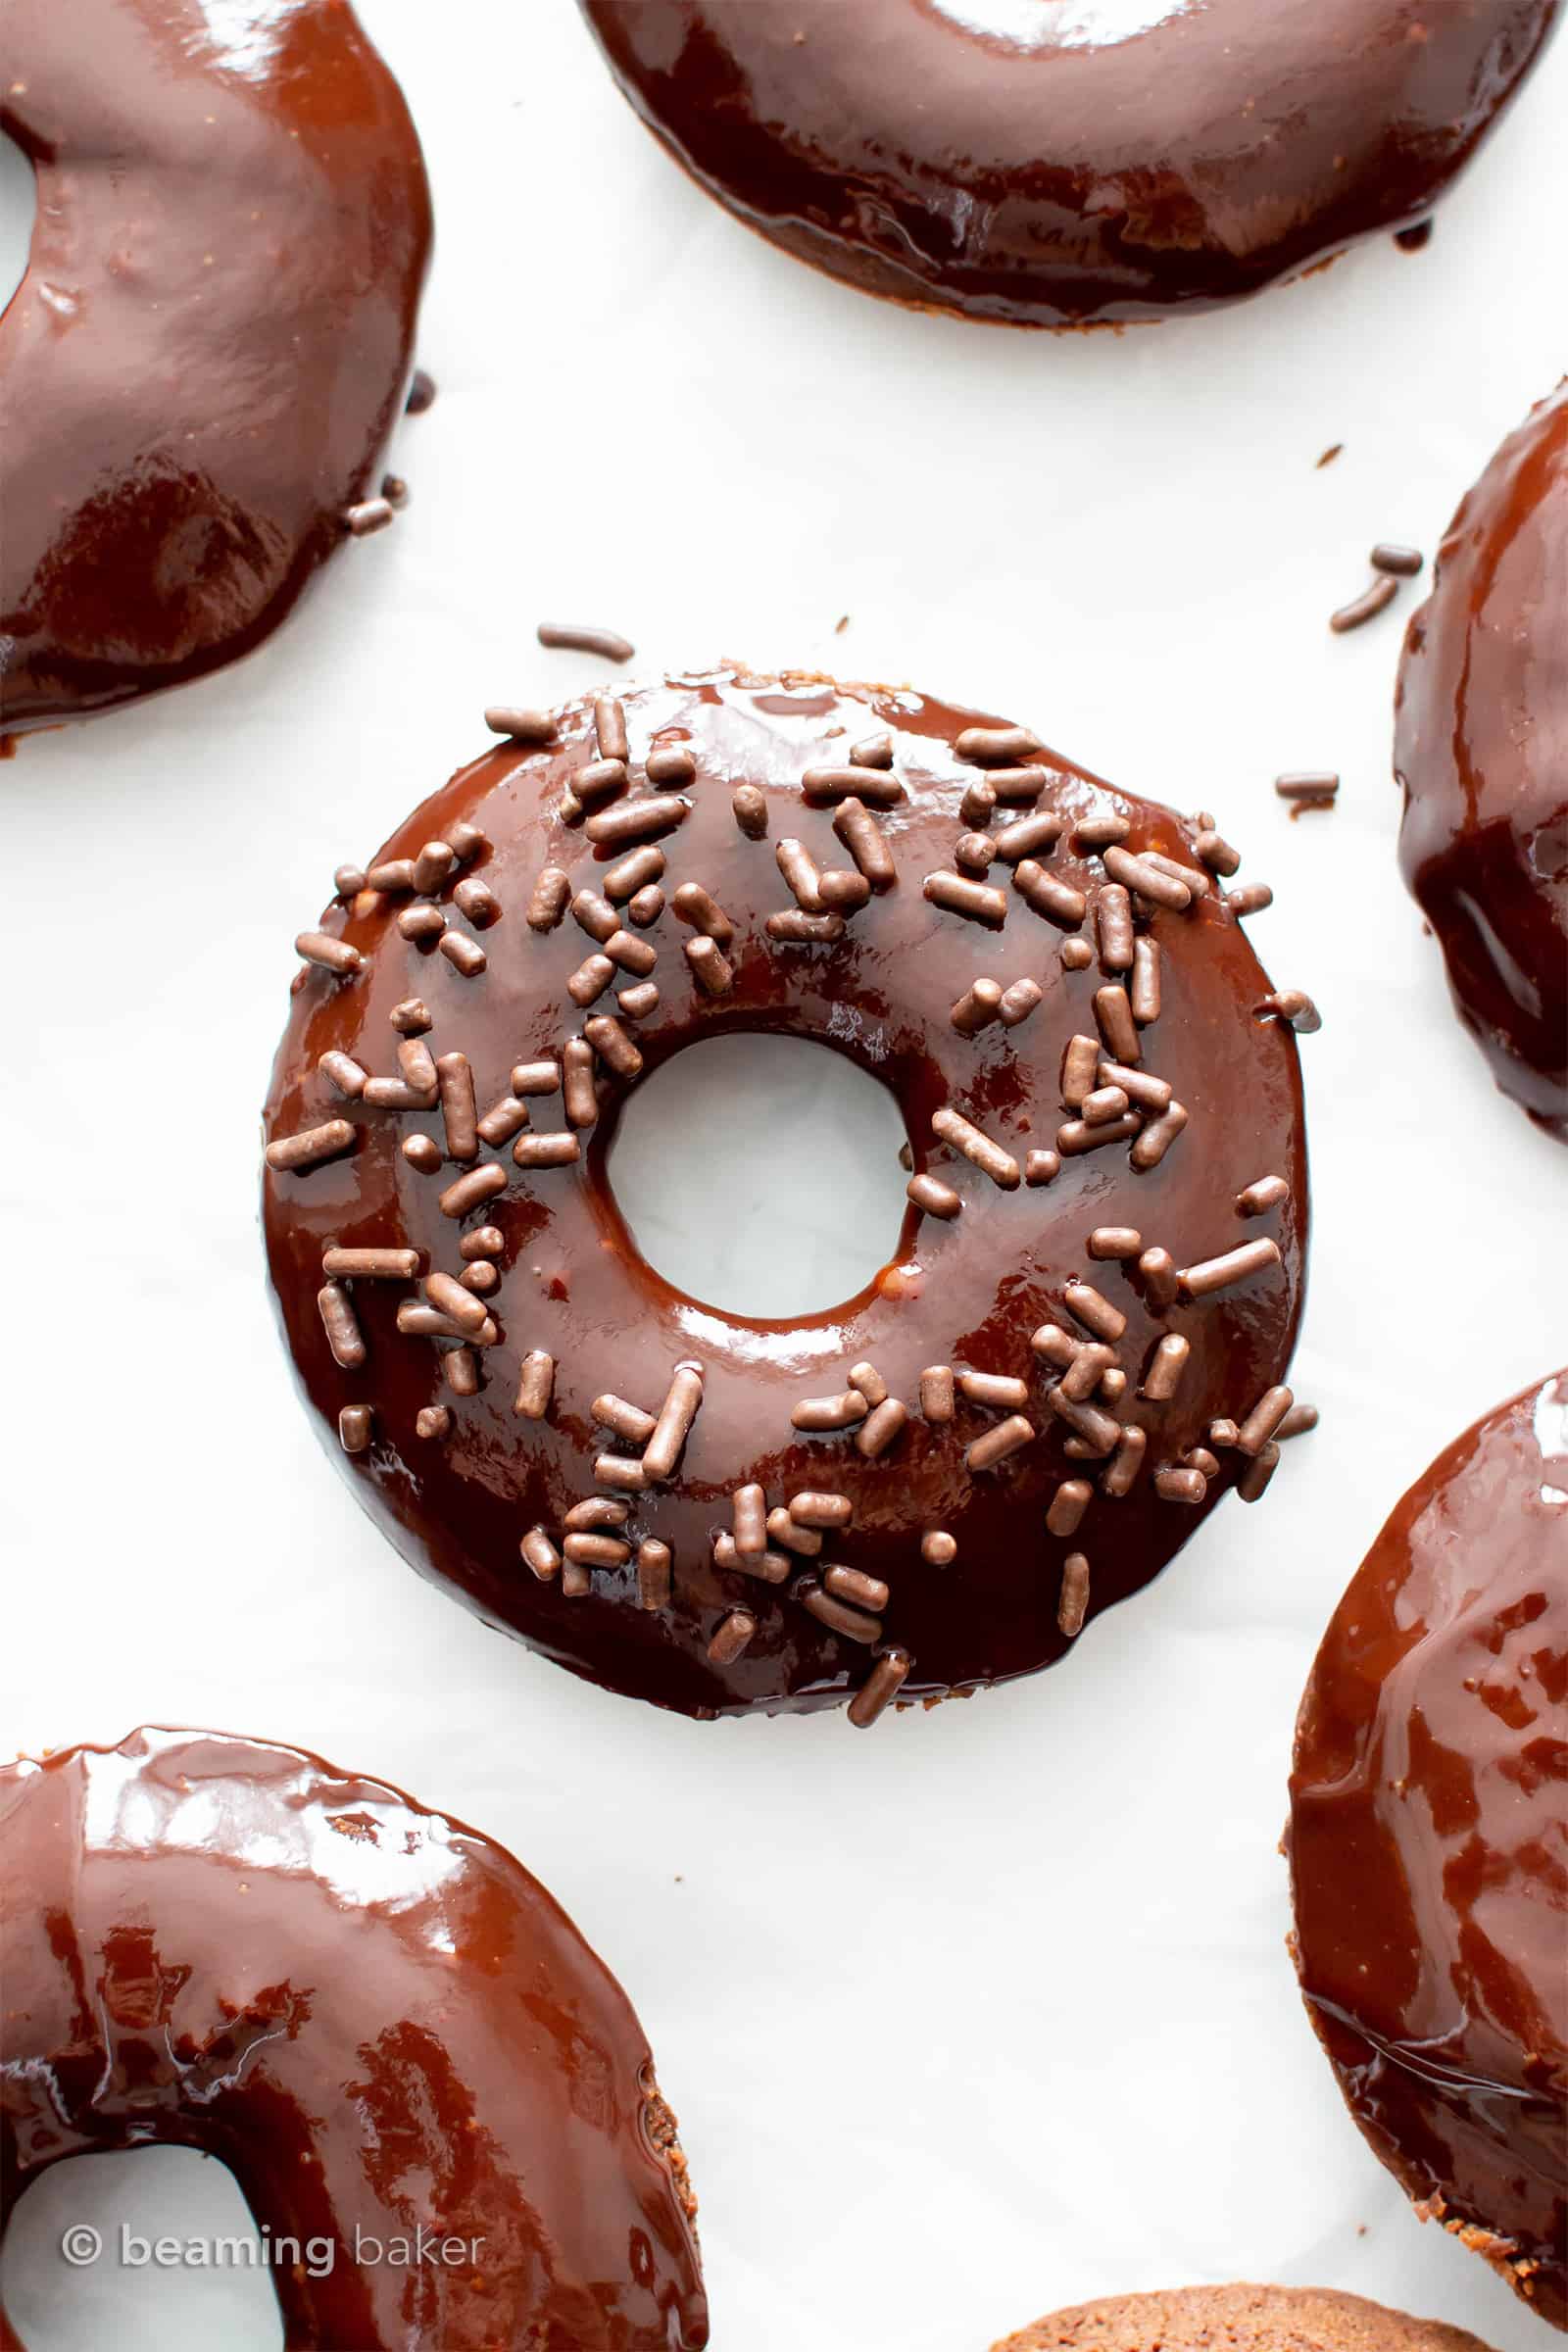 Vegan Gluten Free Donuts: soft ‘n fluffy vegan gf chocolate donuts topped with luxurious vegan chocolate glaze. The best gluten free vegan donut recipe! #GlutenFreeVegan #VeganGlutenFree #VeganDonuts #Doughnuts #Vegan | Recipe at BeamingBaker.com